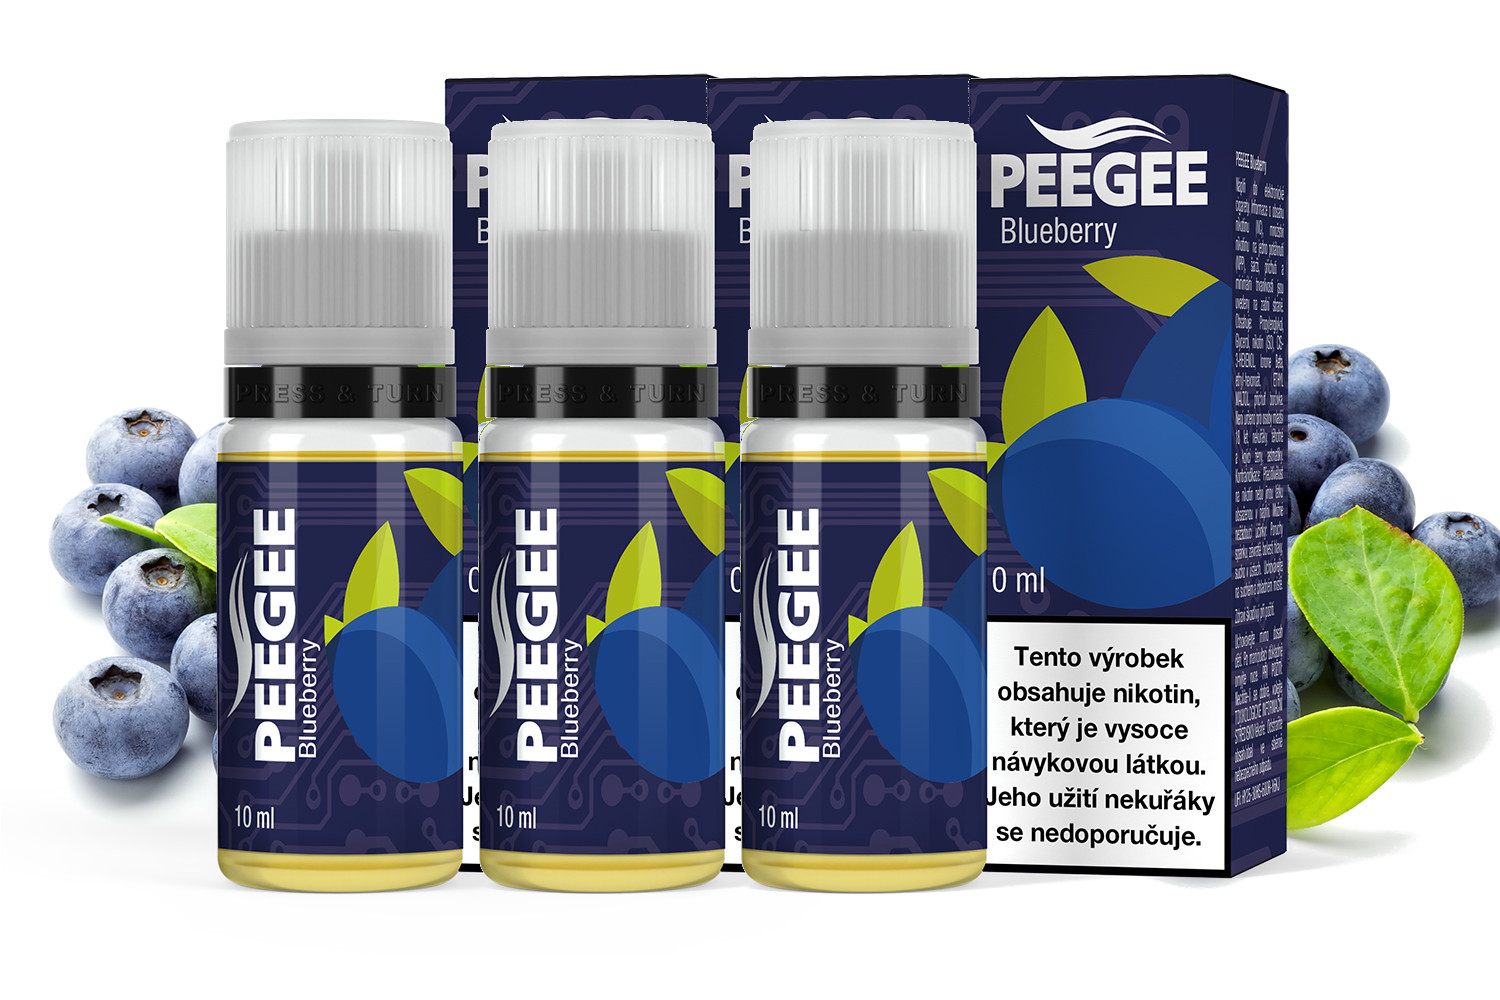 PEEGEE - Borůvka (Blueberry) 3x10ml Obsah nikotinu: 6mg